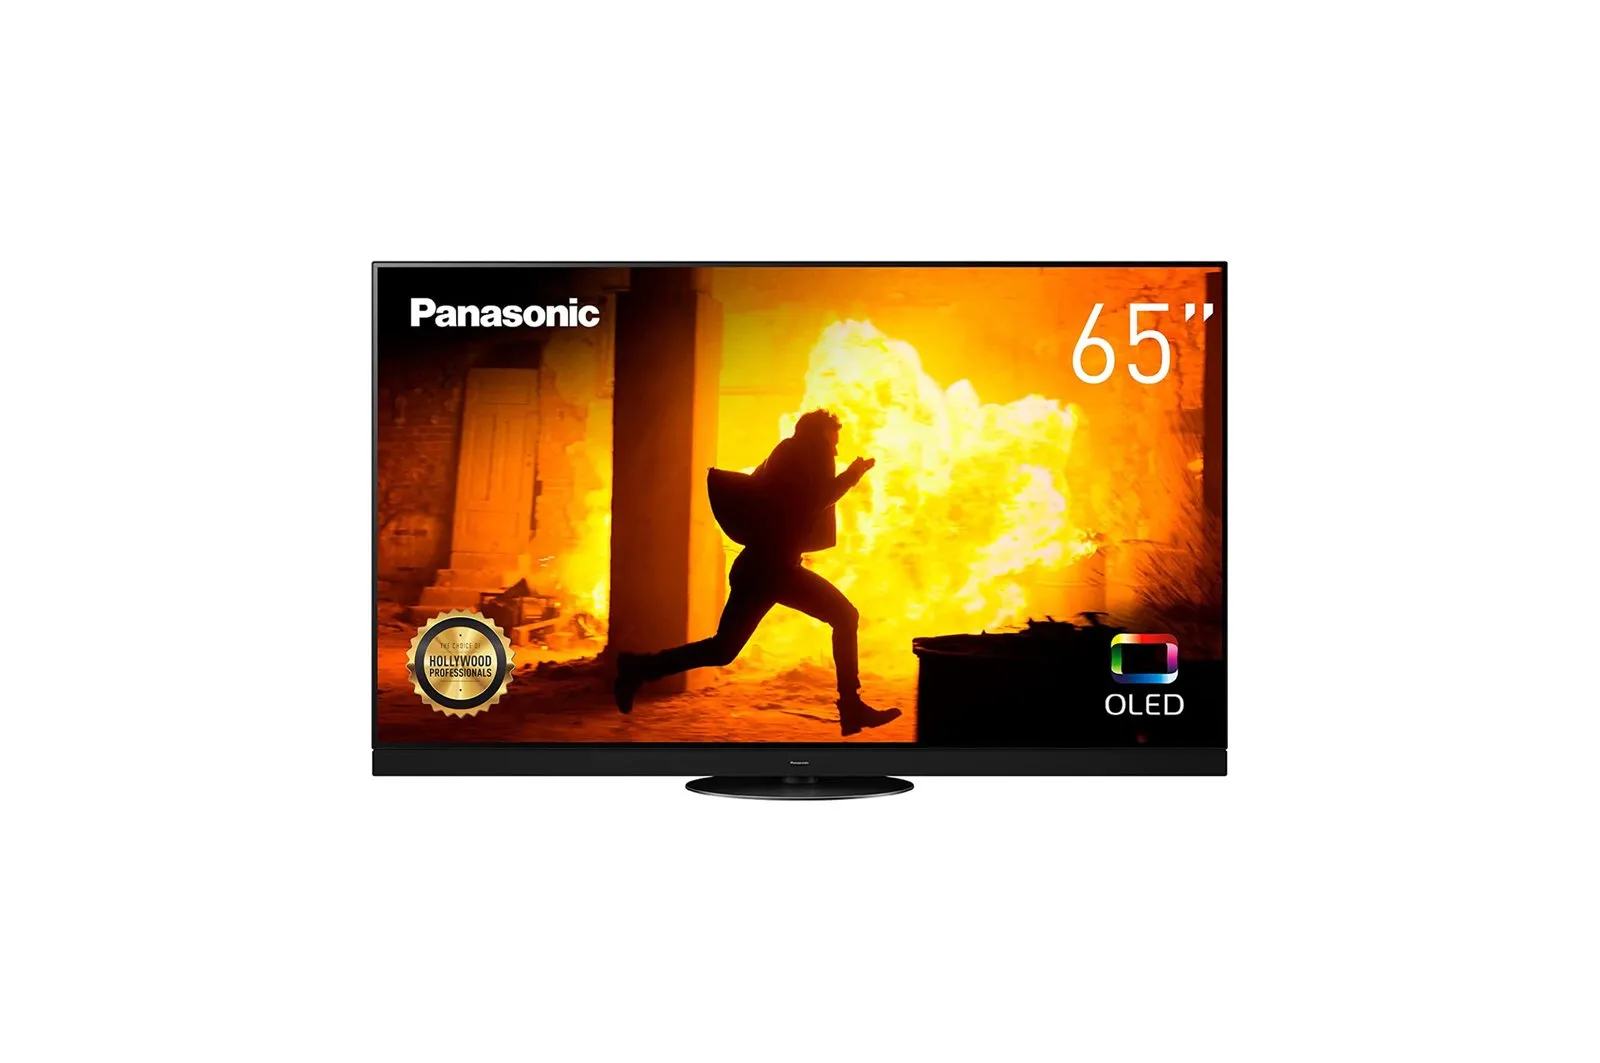 Panasonic 65 Inch LED TV OLED Black Model TH-65H21500M | 1 Year Warranty